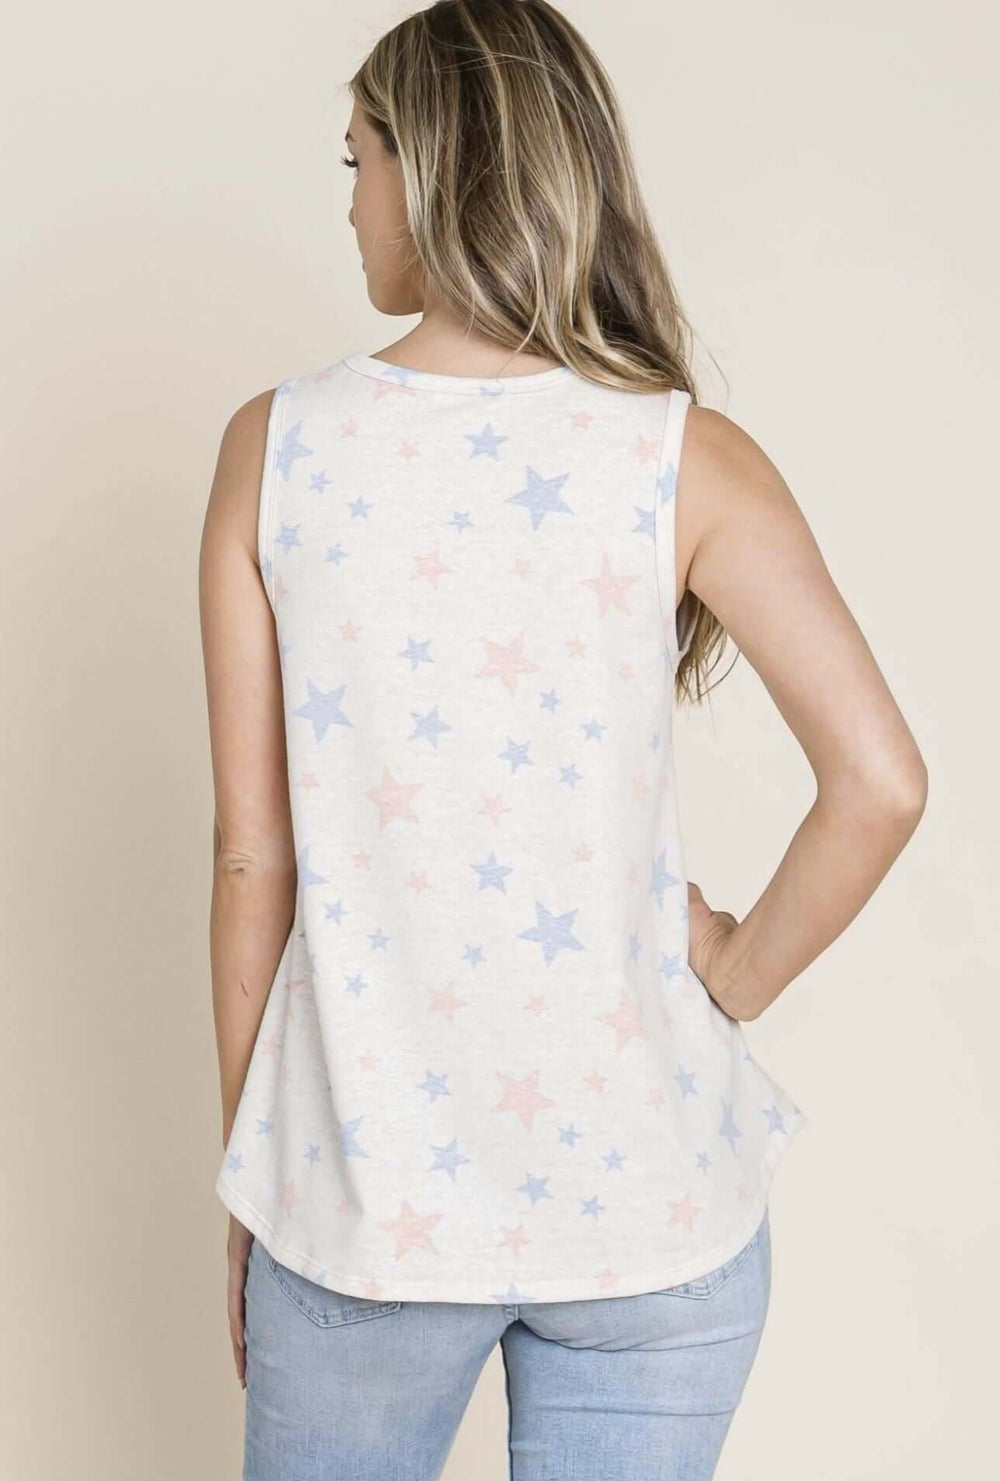 Women's Summer Sleeveless Top Pastel Star Print Made in USA